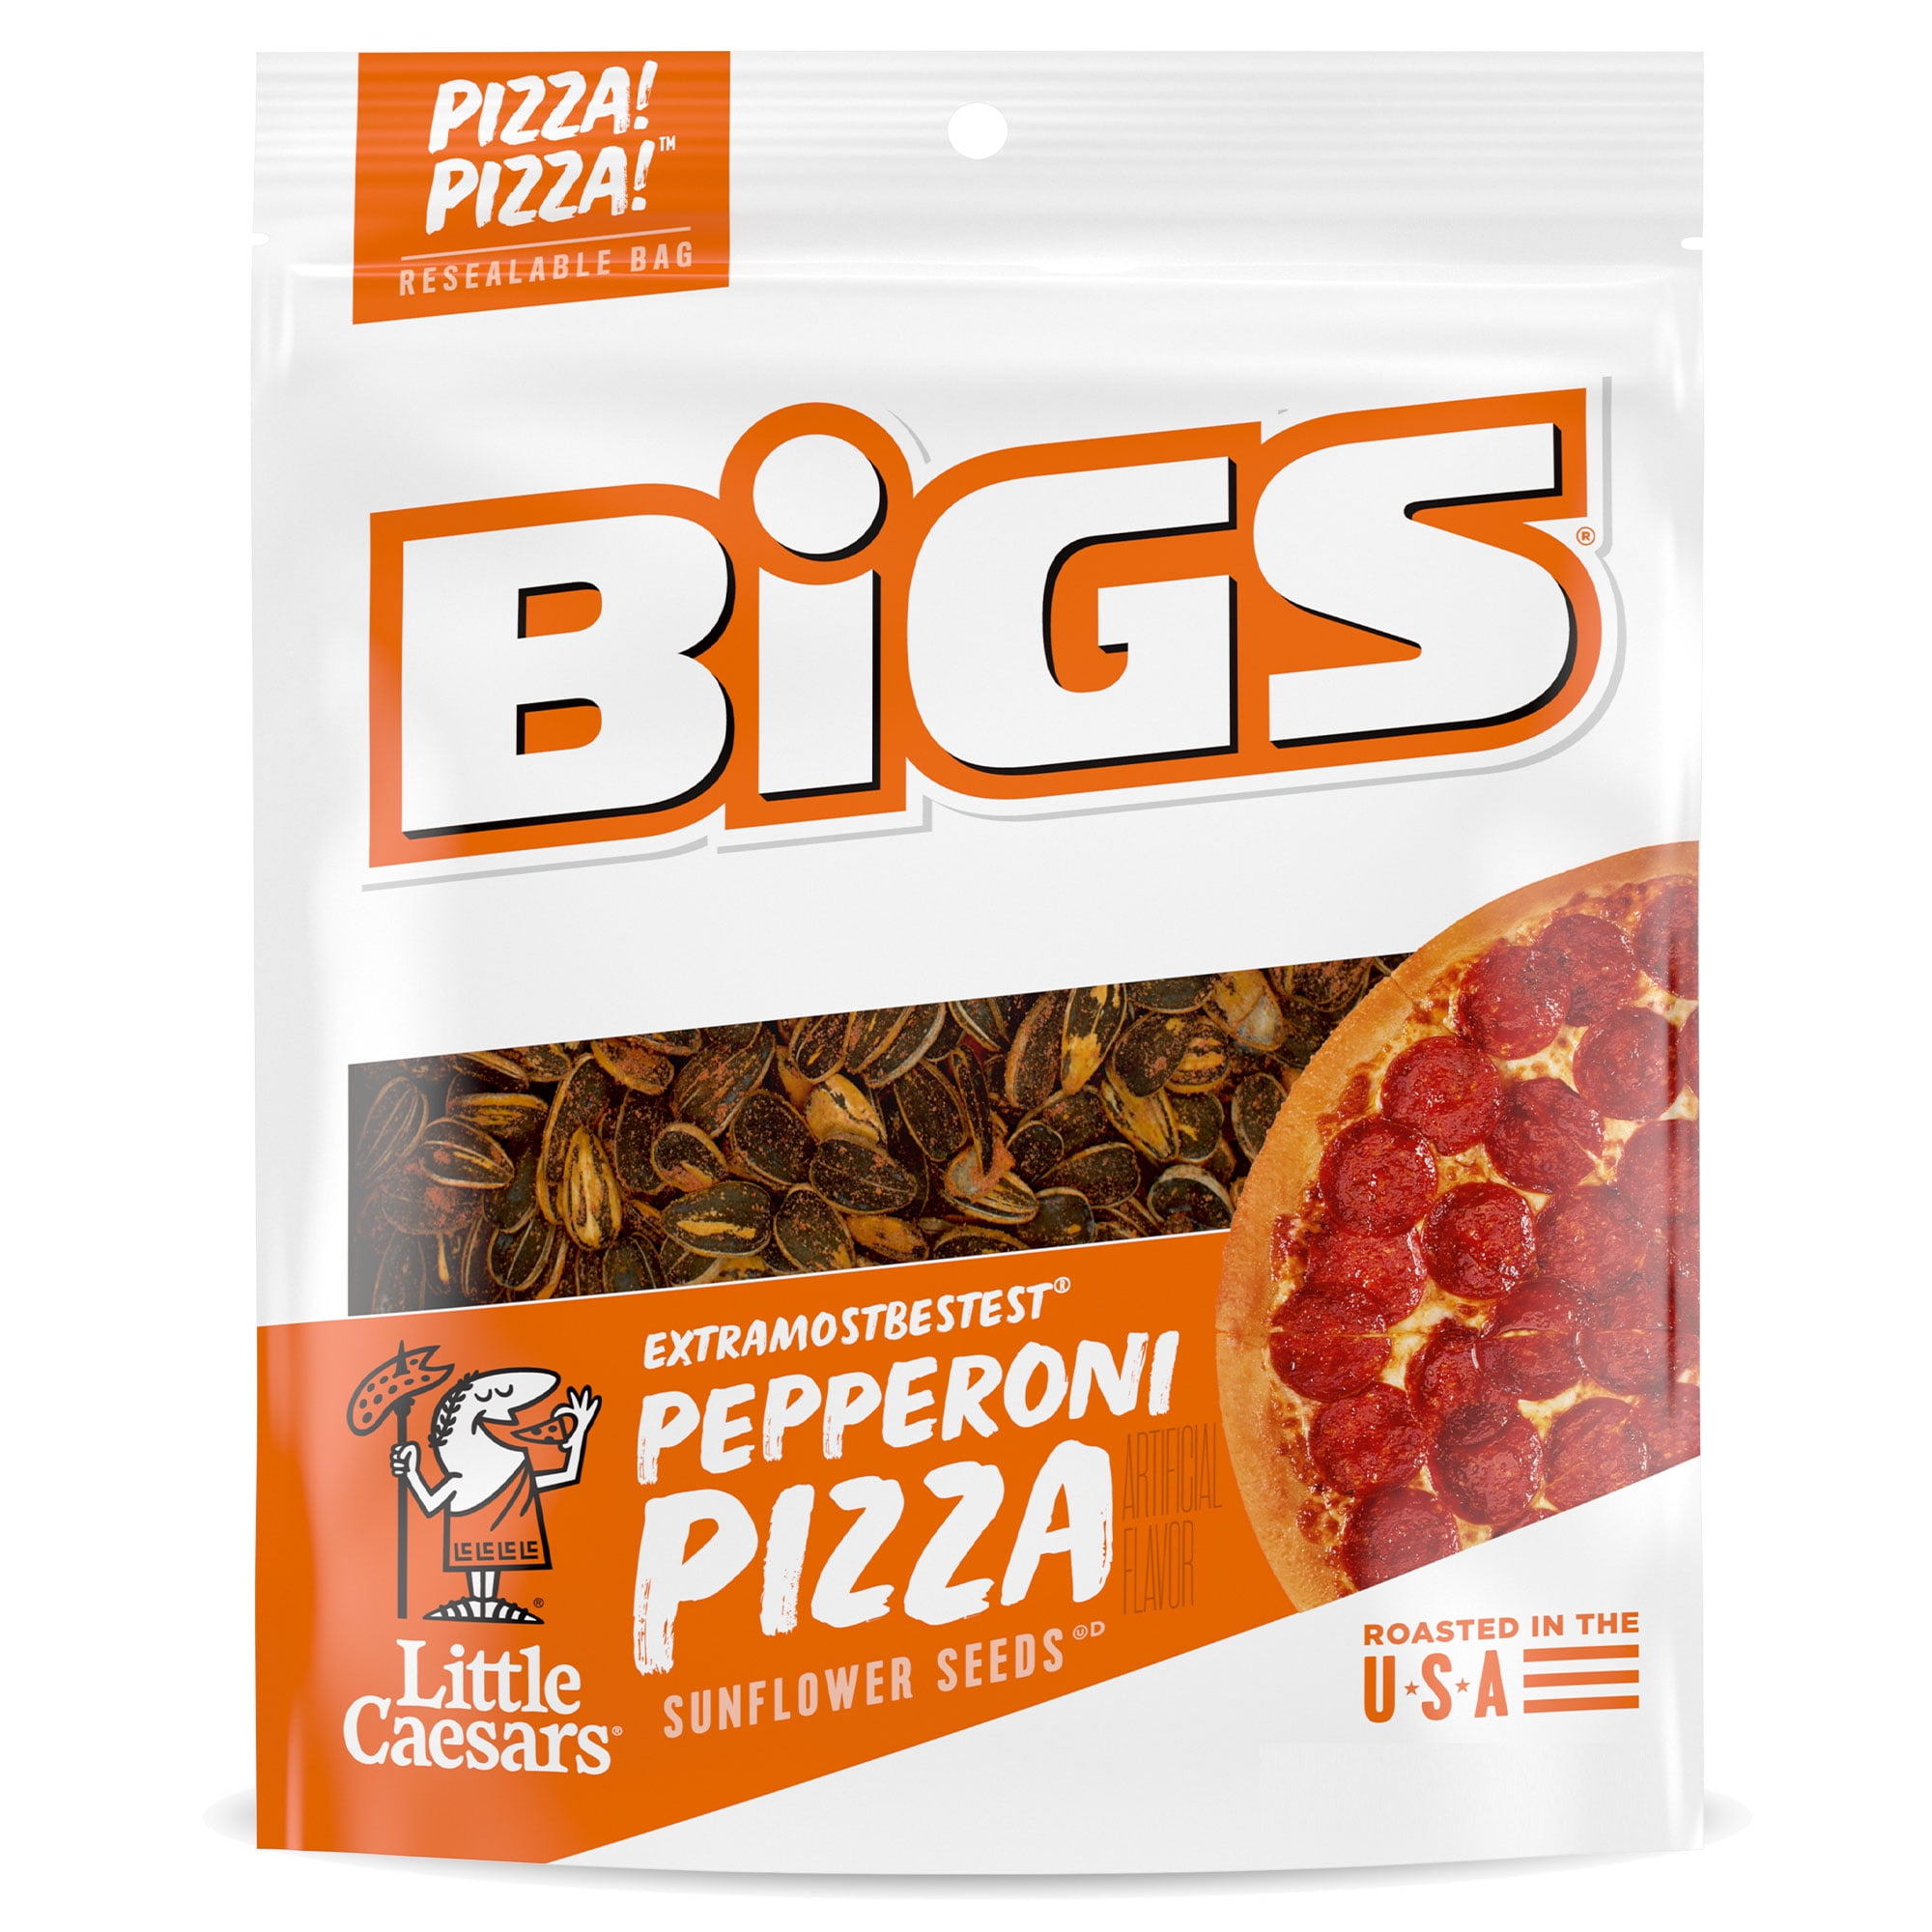 BIGS Little Caesars Pepperoni Pizza Flavored Sunflower Seeds,  oz. -  